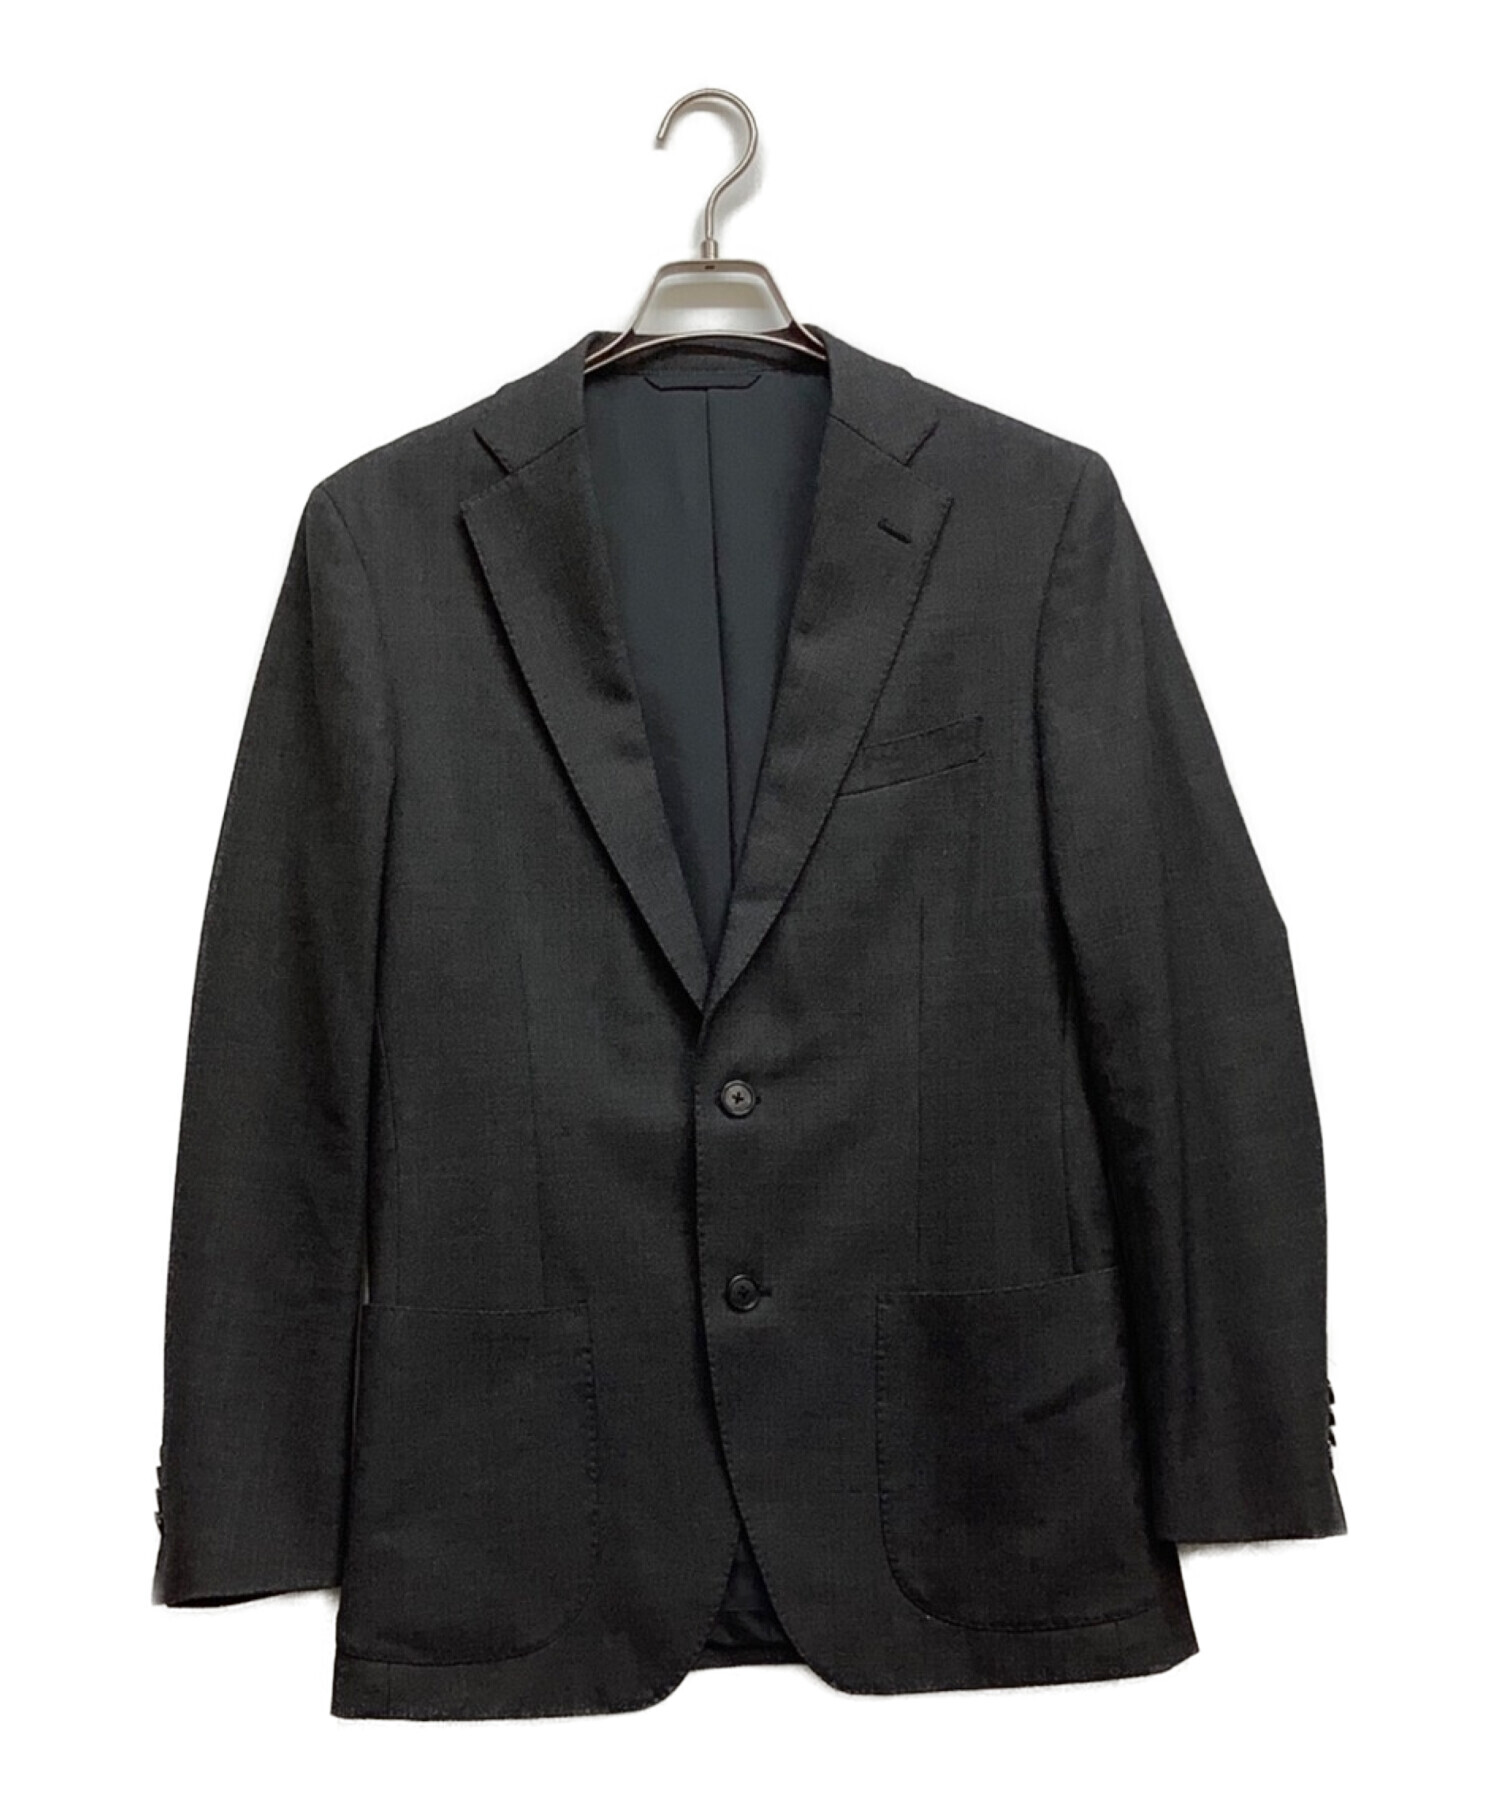 THE SUIT COMPANY ジャケット - スーツ